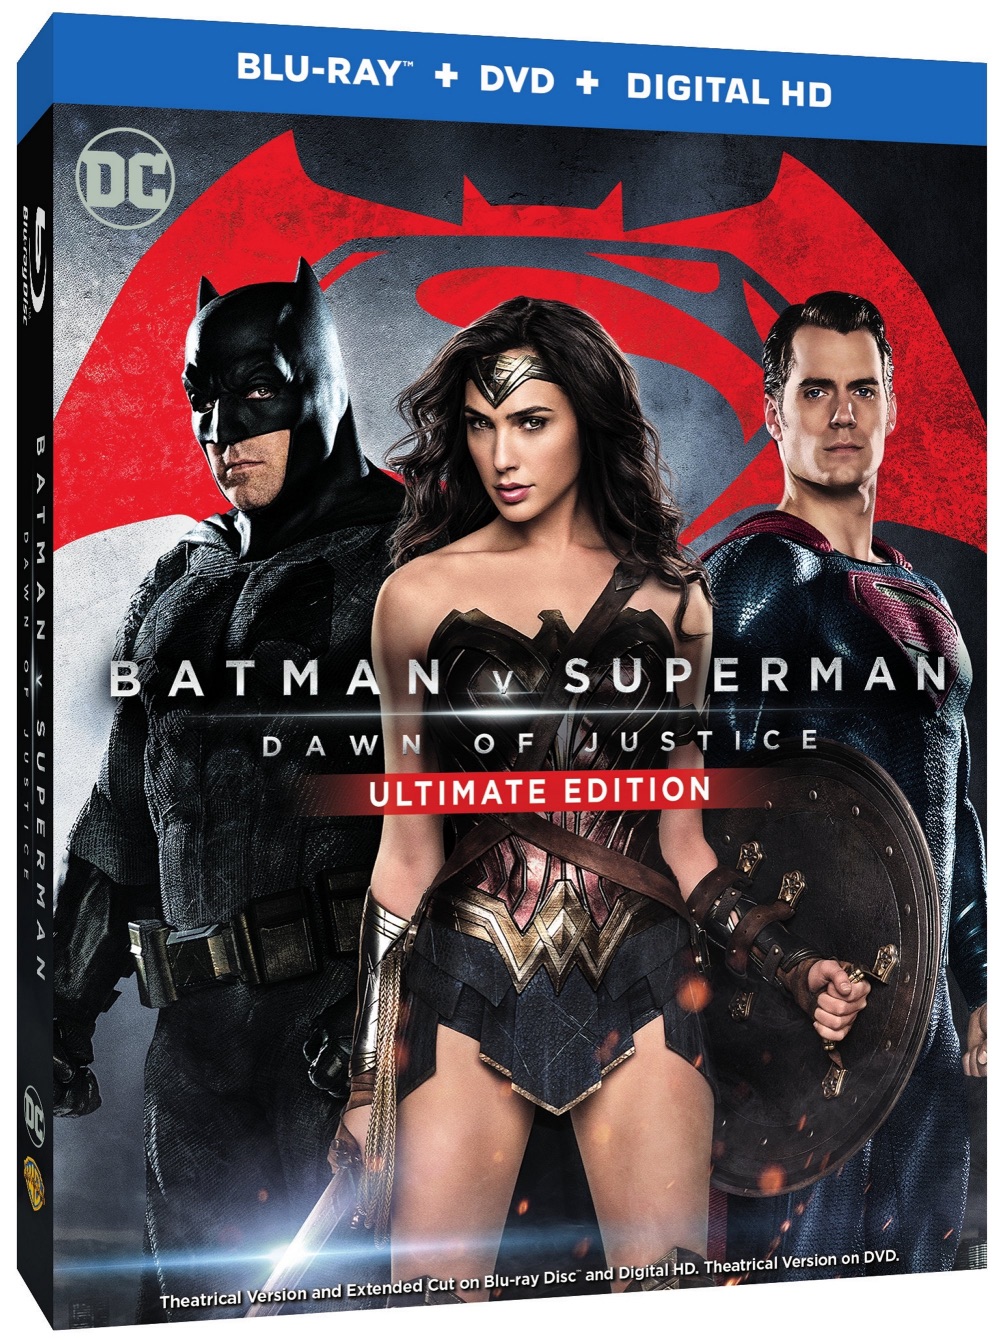 Batman v Superman Blu-ray